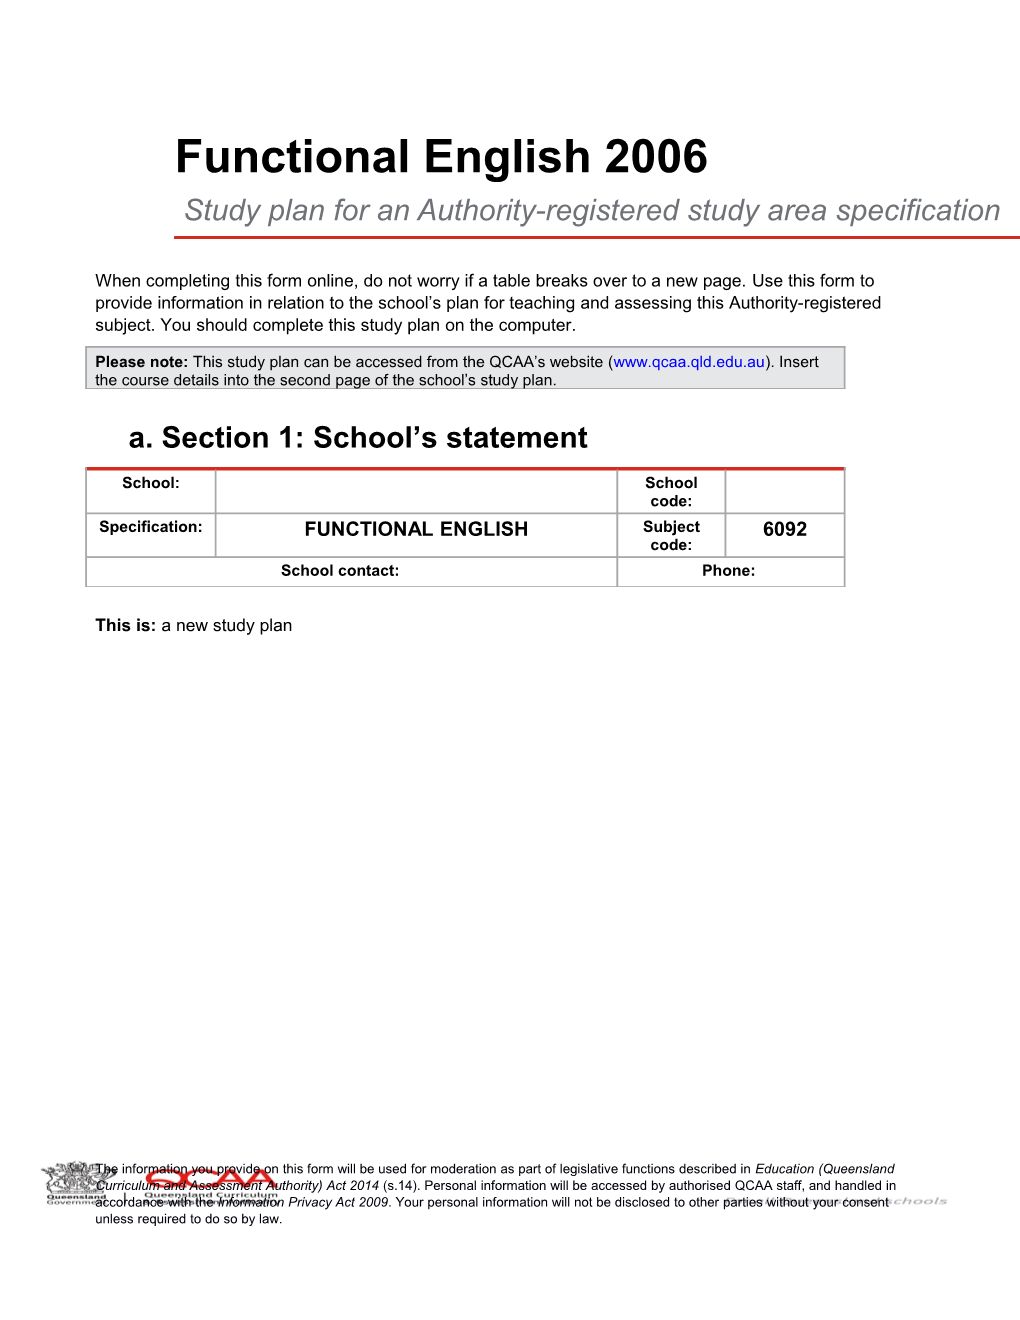 Functional English (2006) Study Plan Template